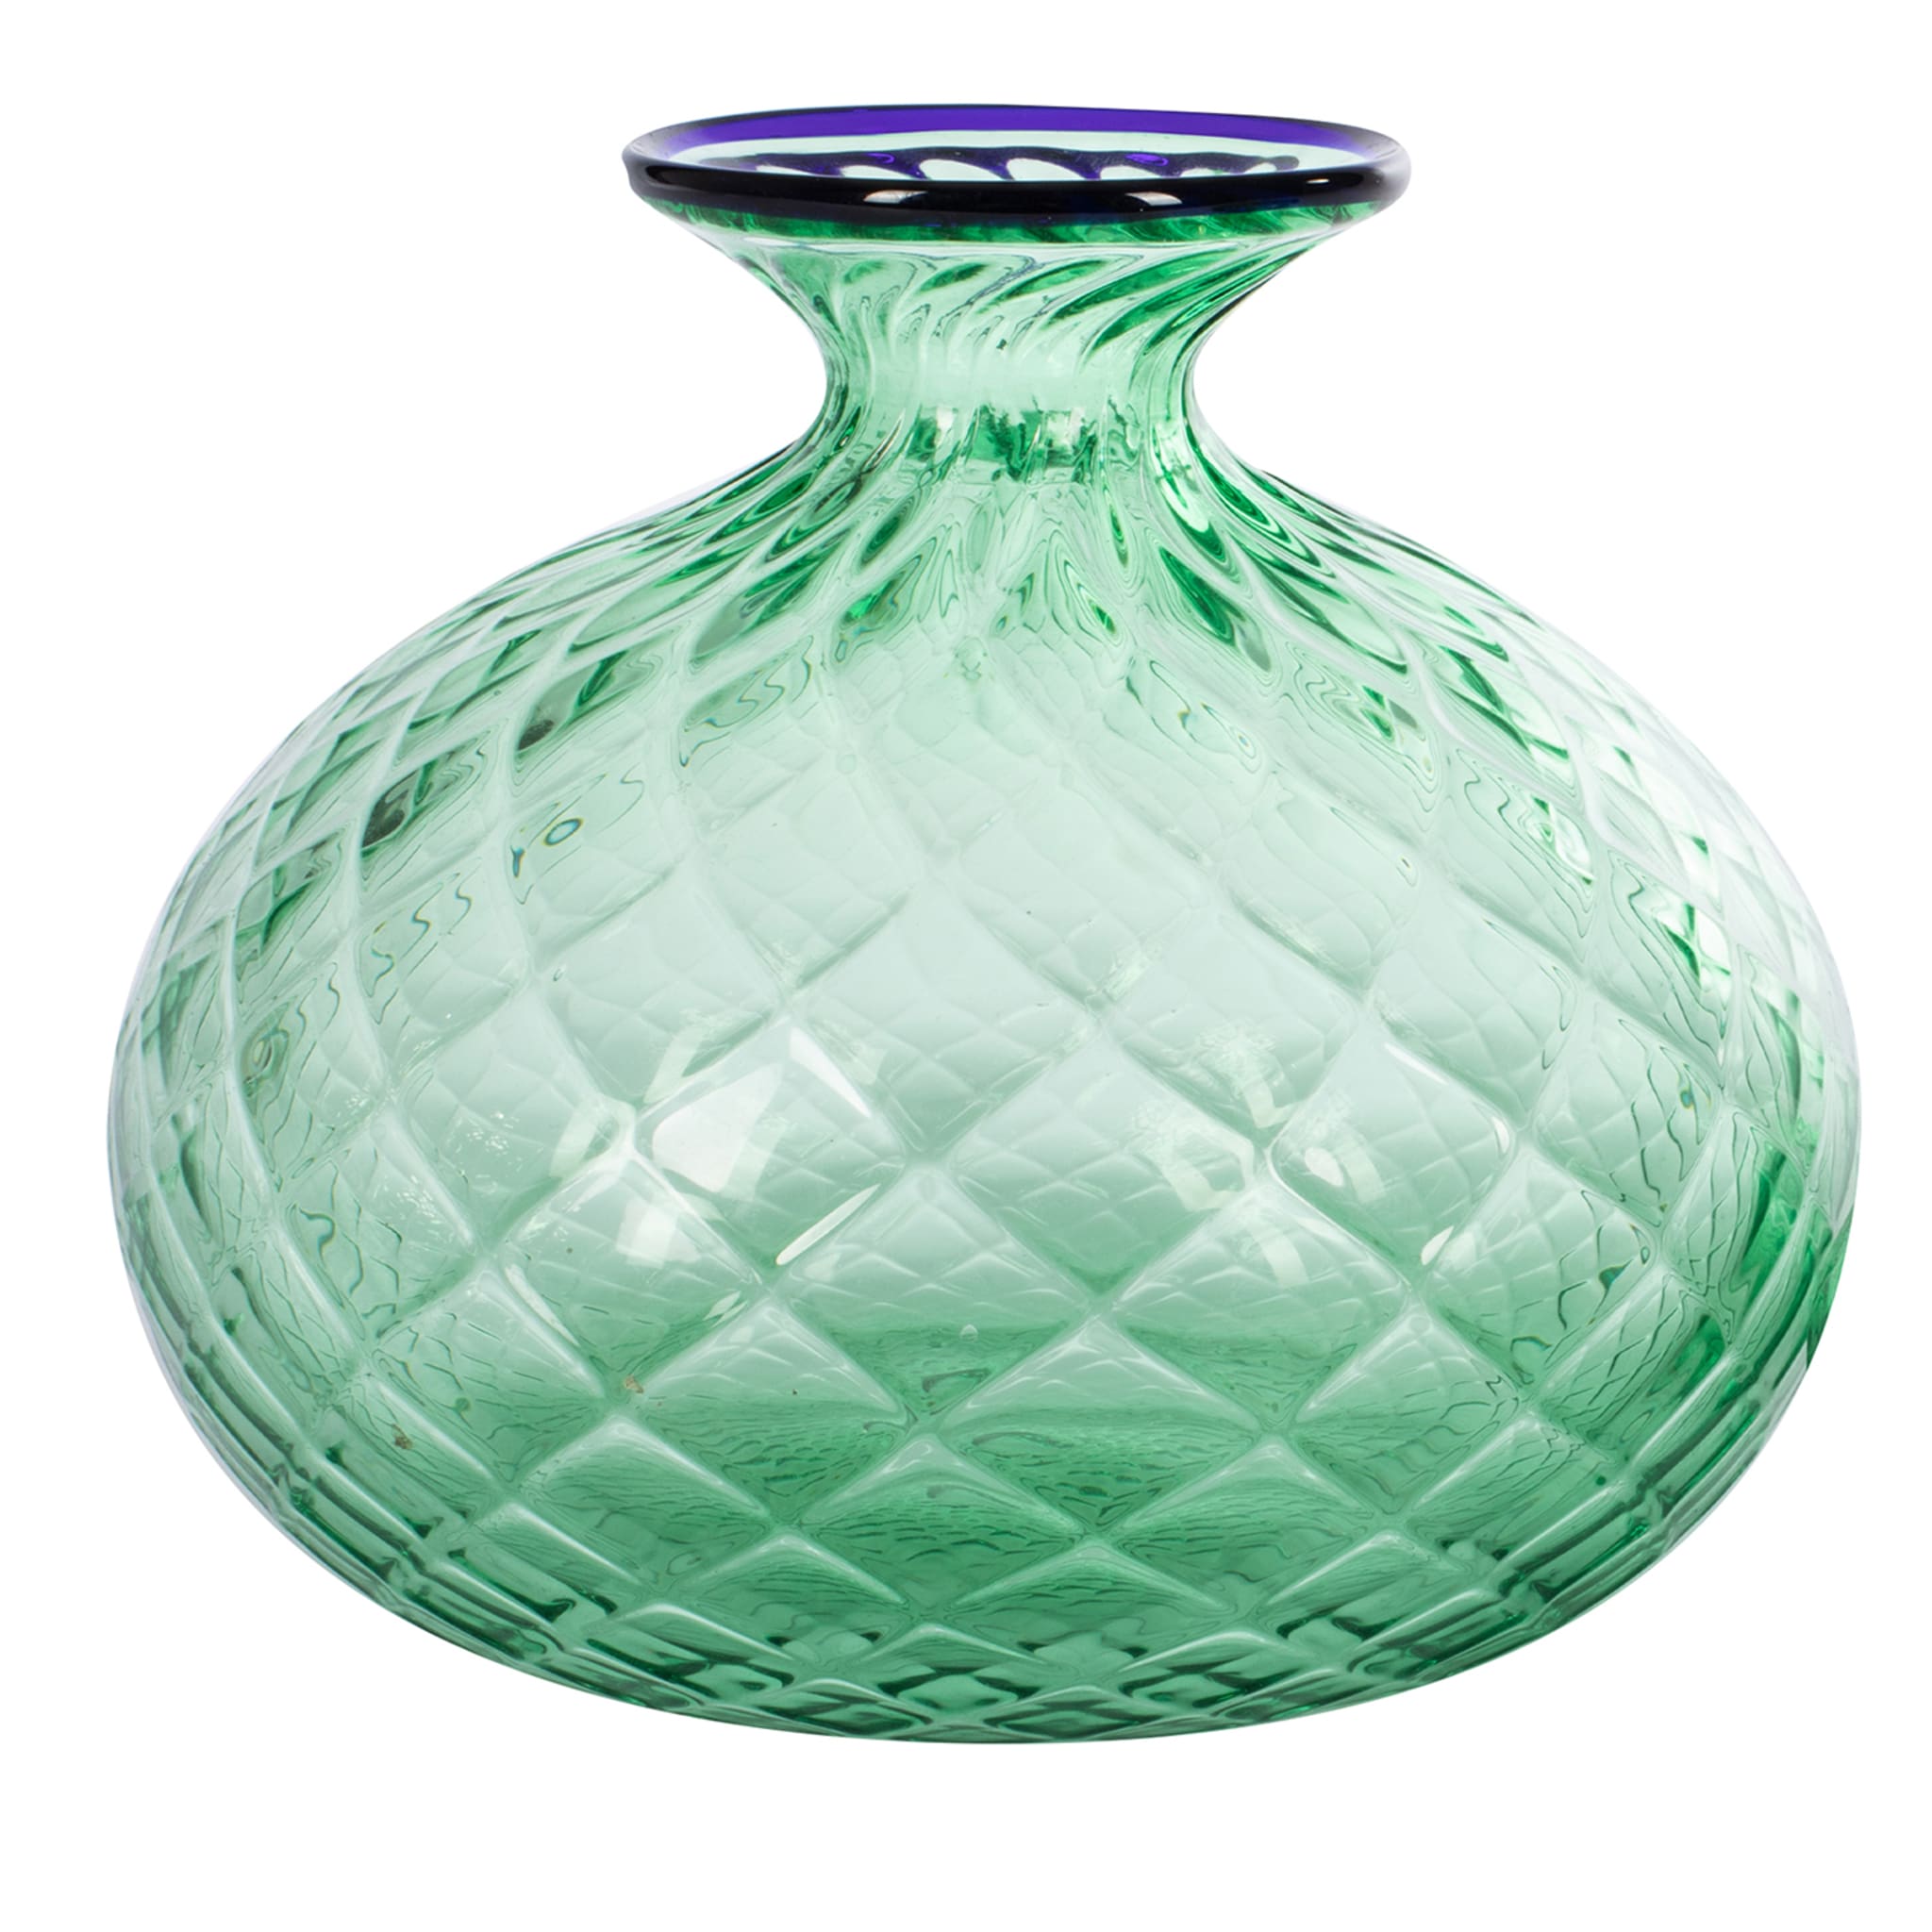 Balloton Green Vase with Blue Rim - Main view